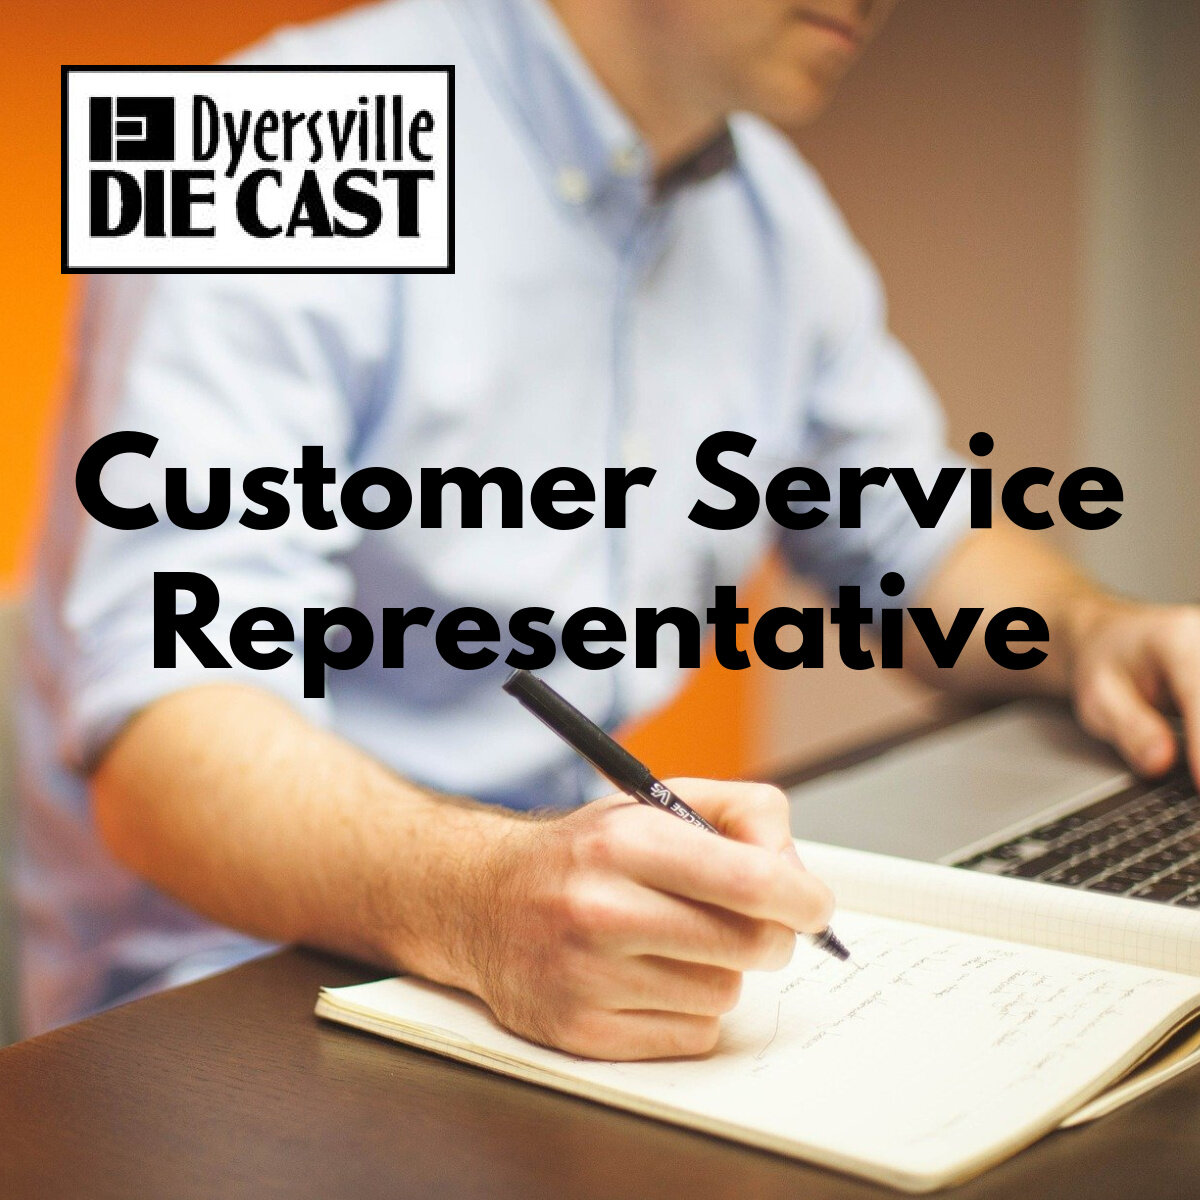 job-opening-dyersville-diecast-customer-service-representative